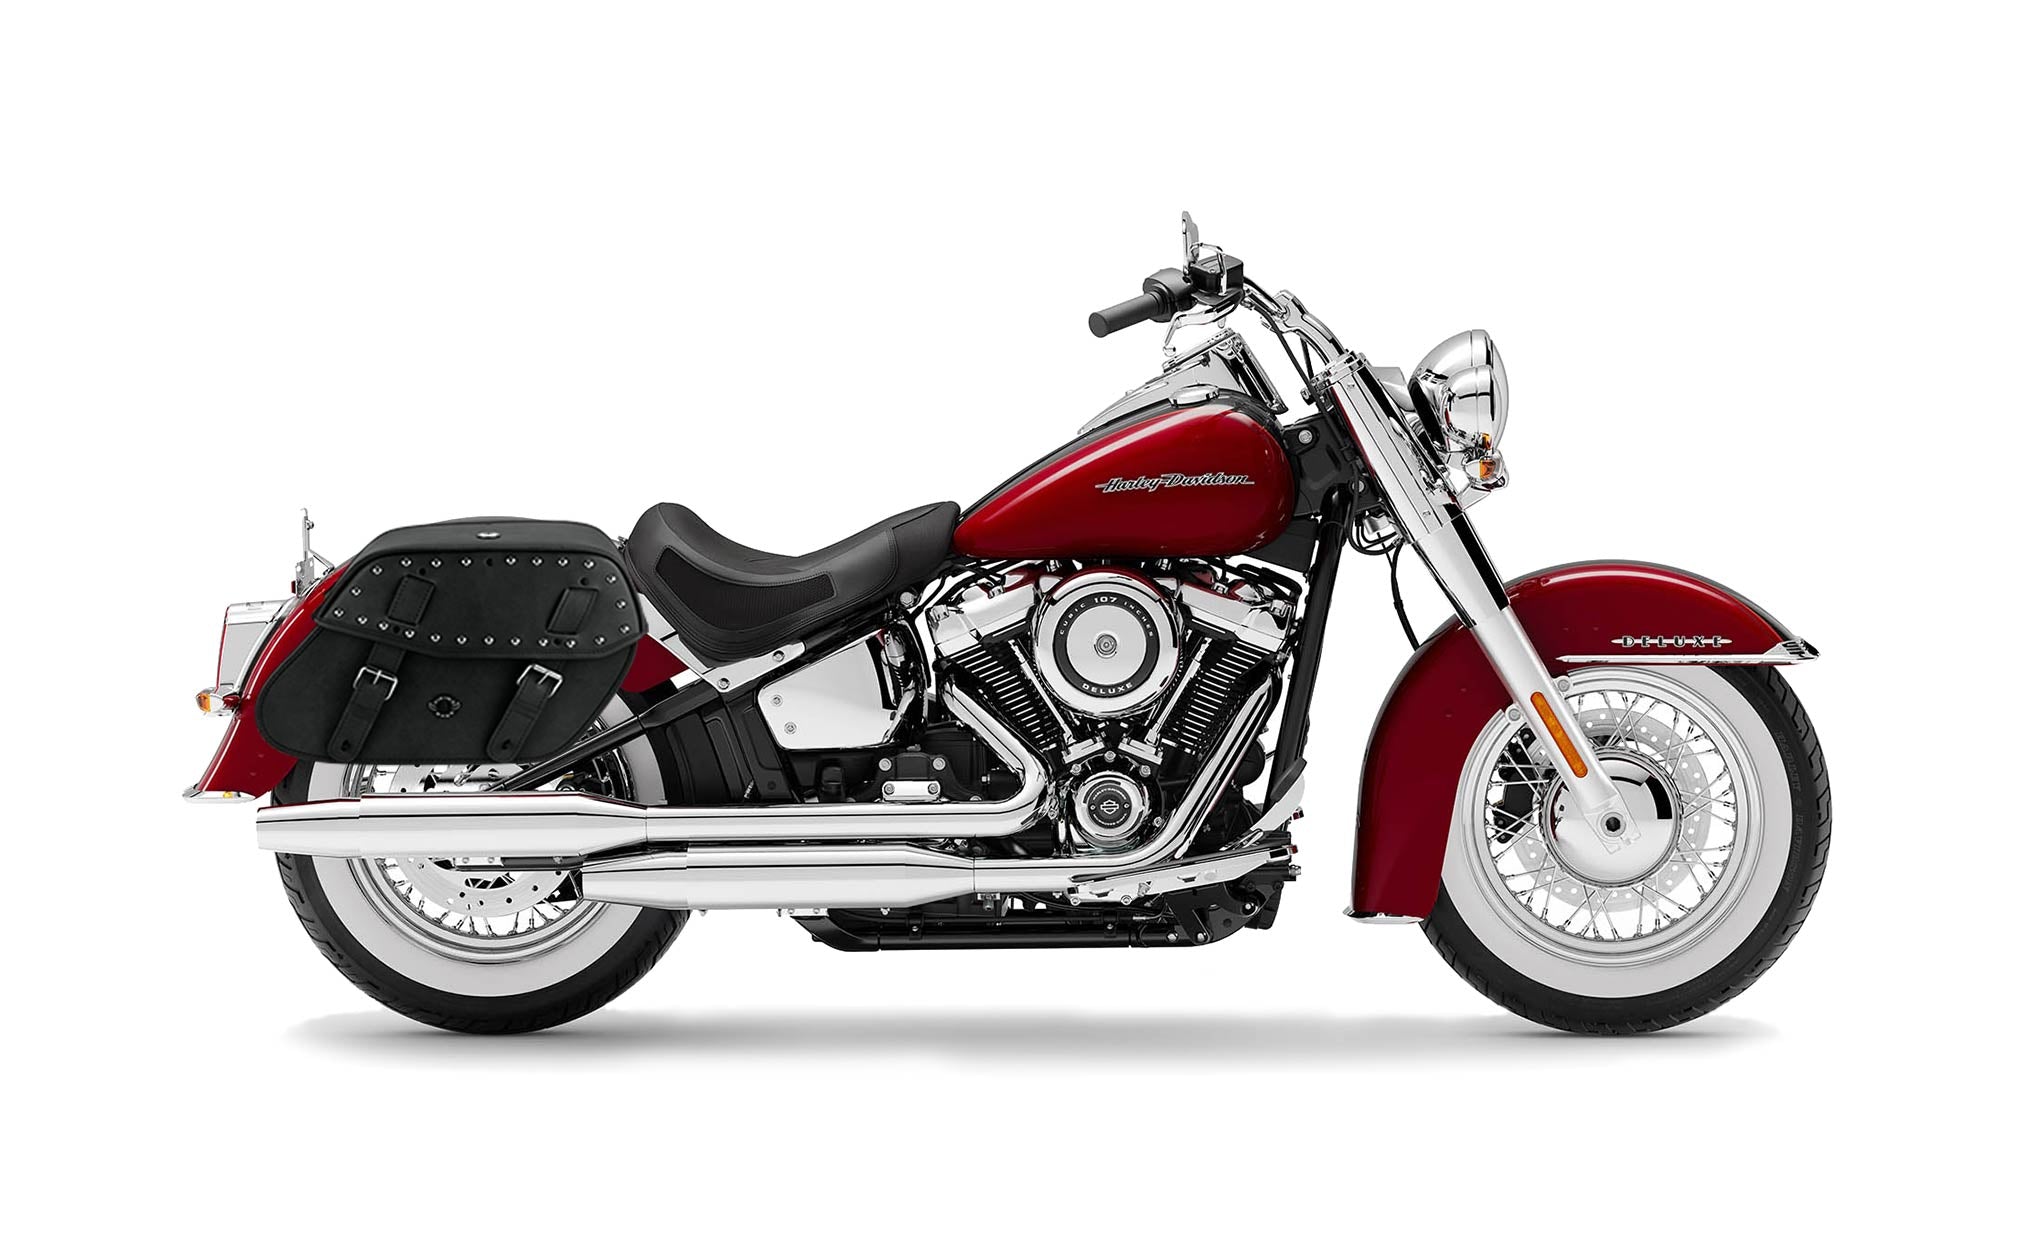 Viking Odin Large Studded Leather Motorcycle Saddlebags For Harley Softail Deluxe Flstn I on Bike Photo @expand